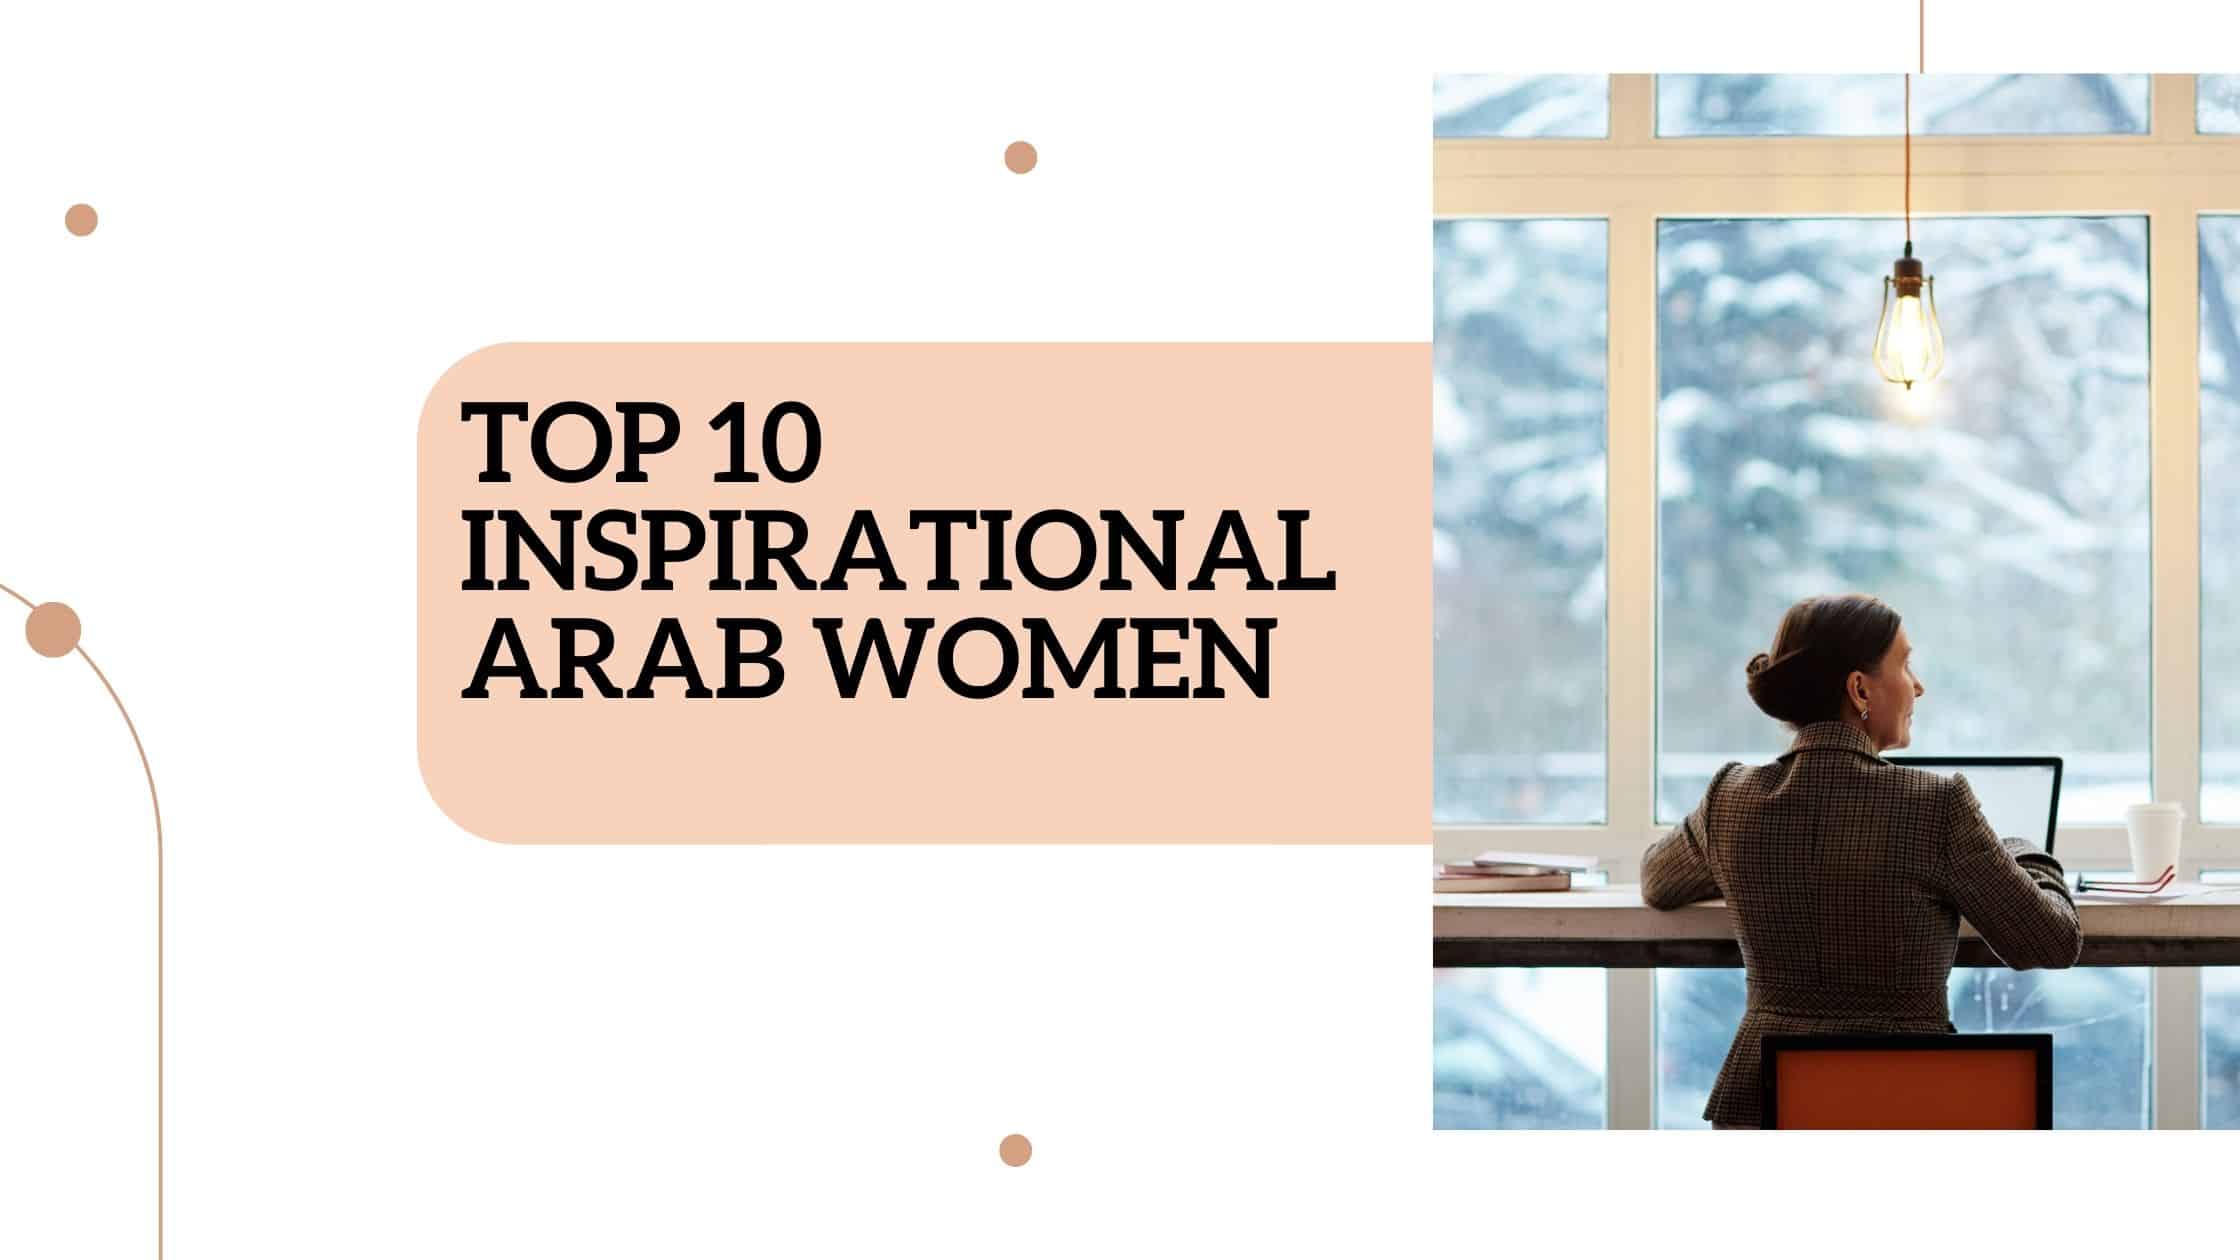 Top 10 inspirational Arab women